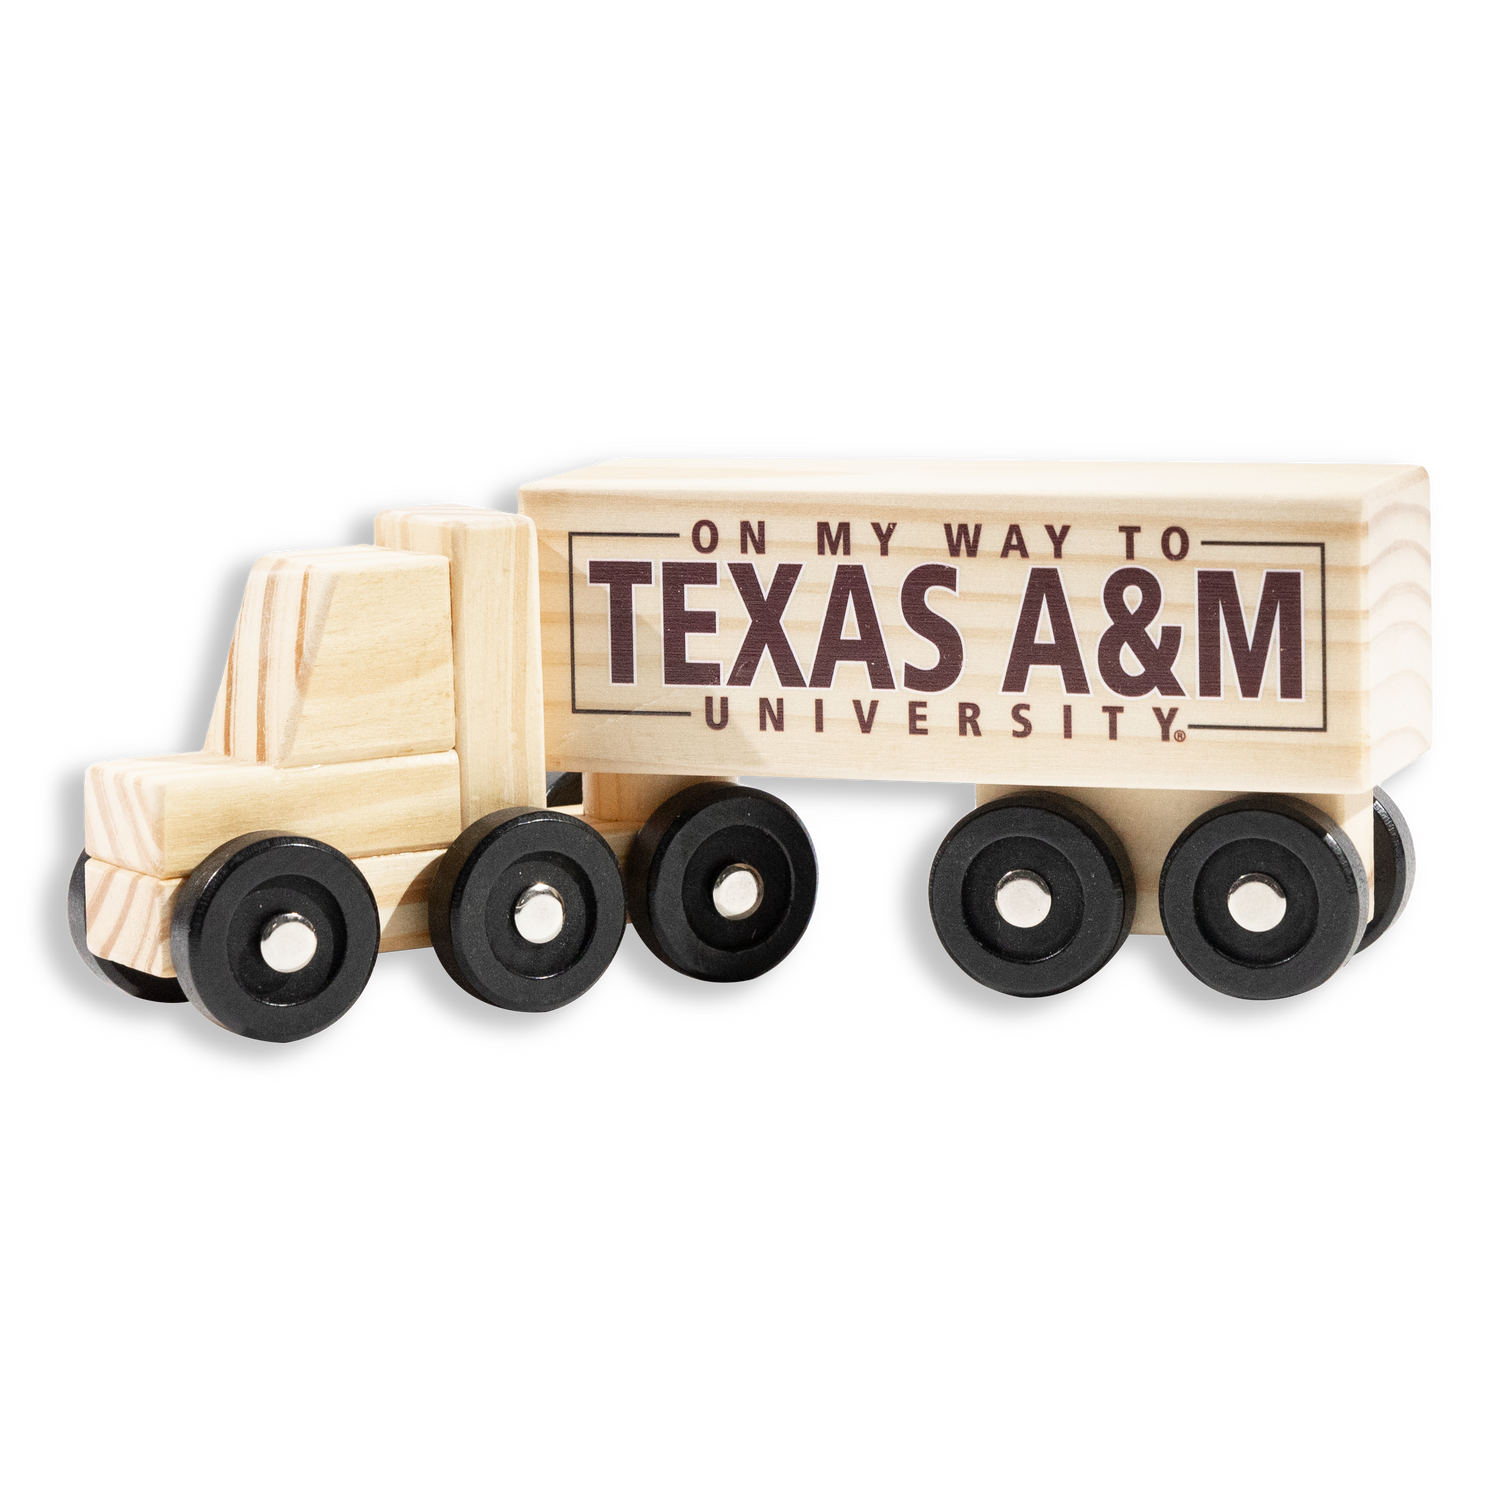 Texas A&M Wooden Semi Truck Toy